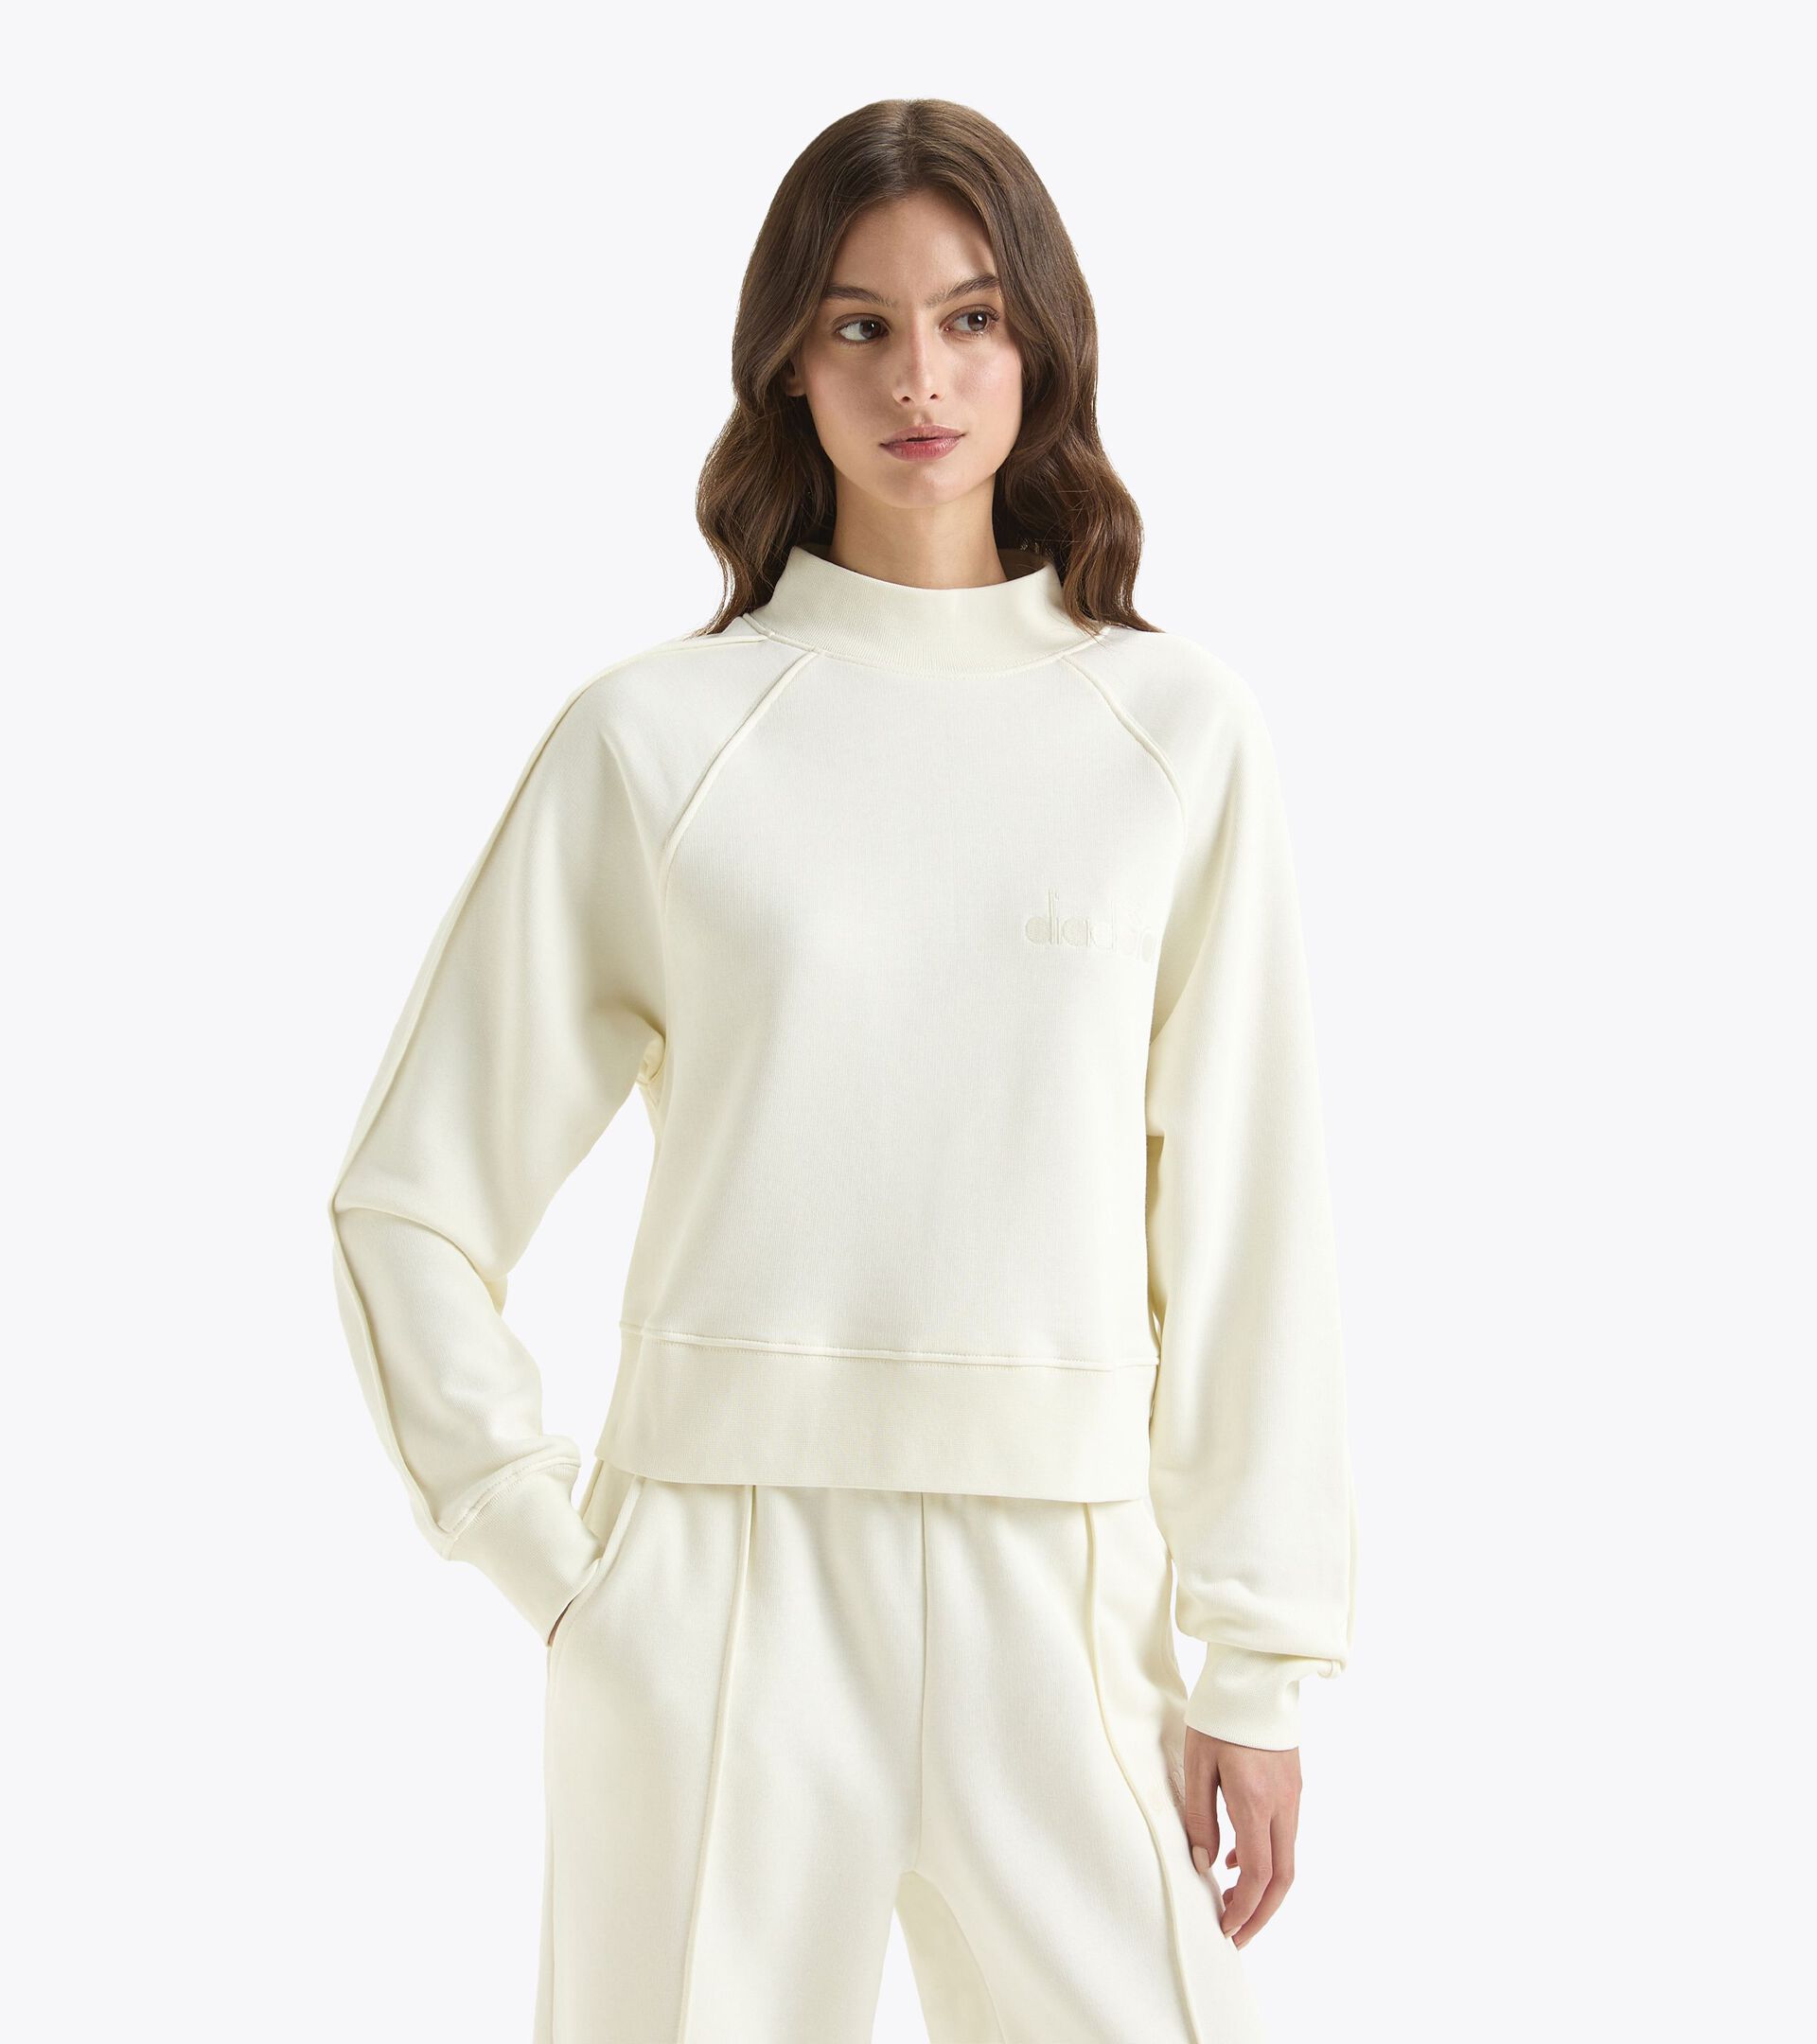 Sweatshirt - Women L. SWEATSHIRT CREW ATHL. LOGO BUTTER WHITE - Diadora